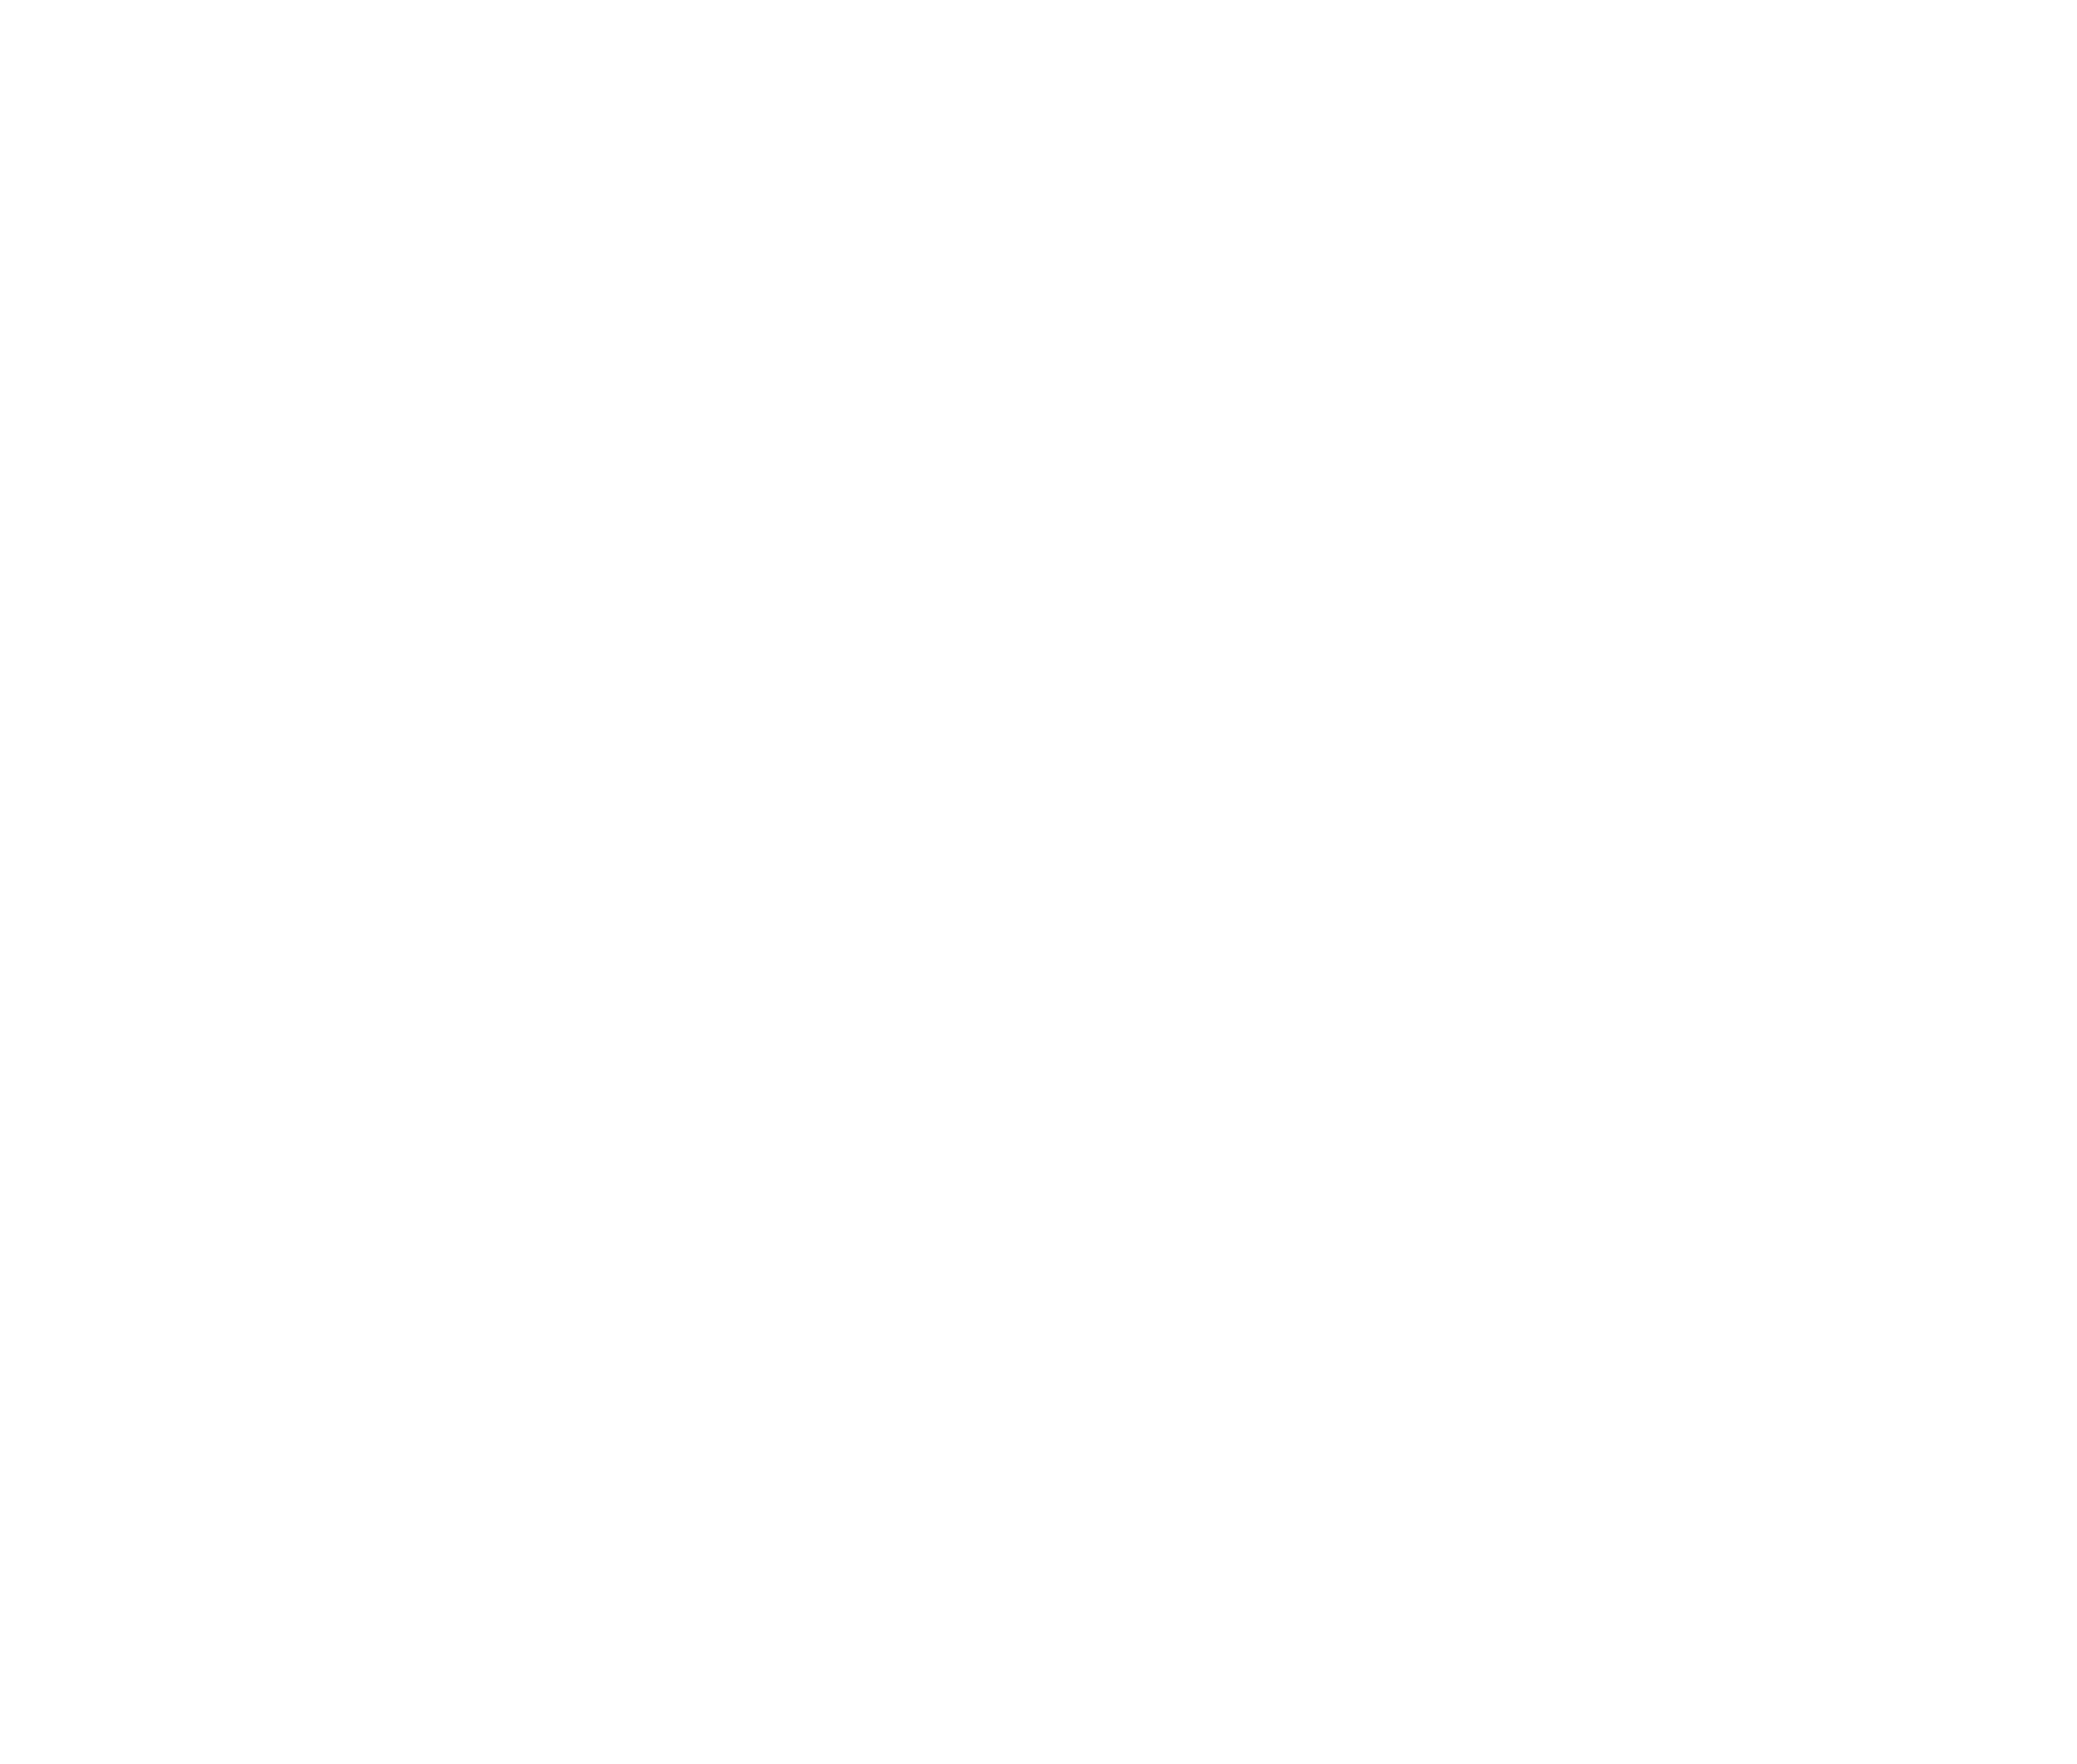 Royal Watches LLC